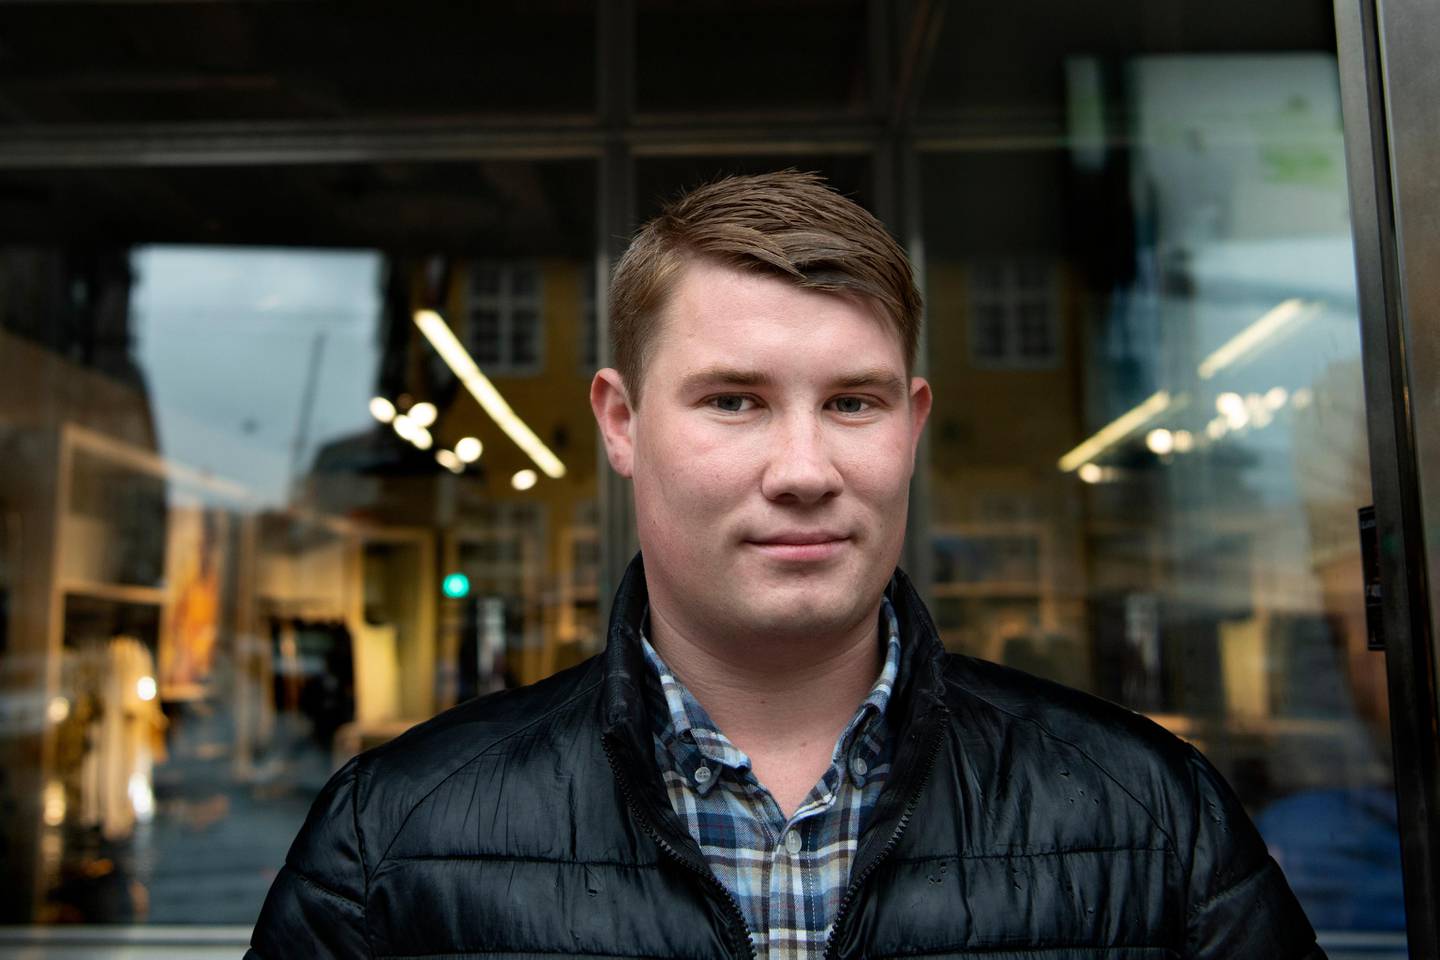 Ole Martin Johansen. 3. kandidat for Fremskrittspartiet, Moss, Viken. Student og rådgiver.